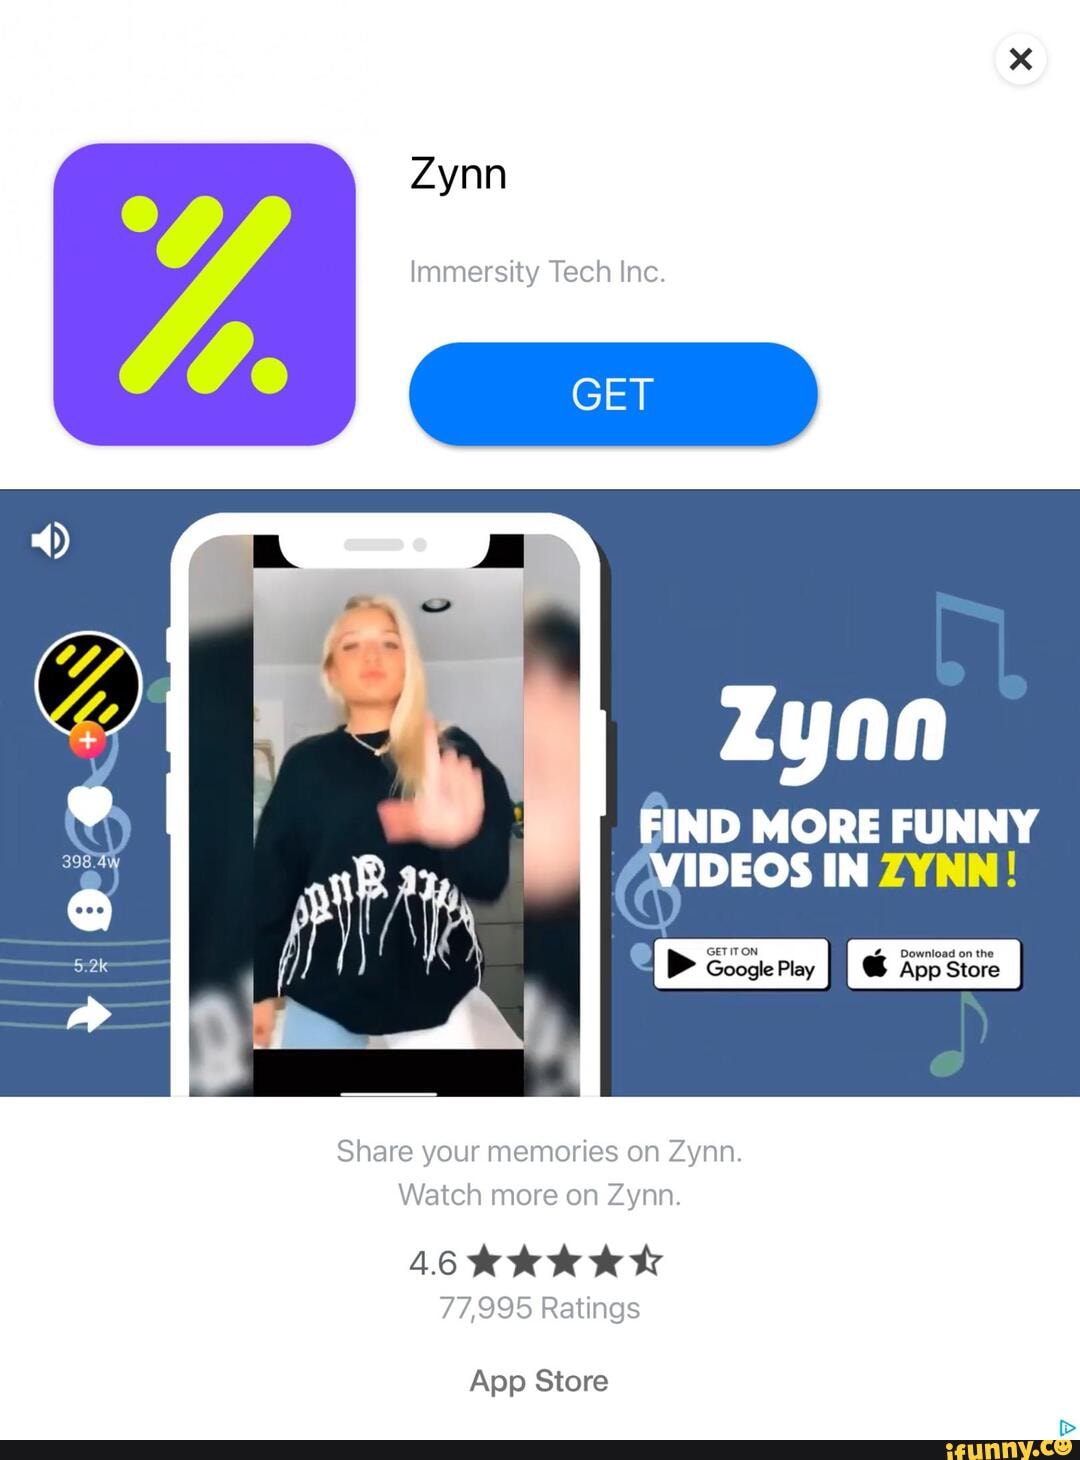 Zynn Immersity Tech Inc. GET LT Zynn FIND MORE FUNNY VIDEOS IN ZYNN!  GETITON Google Play @